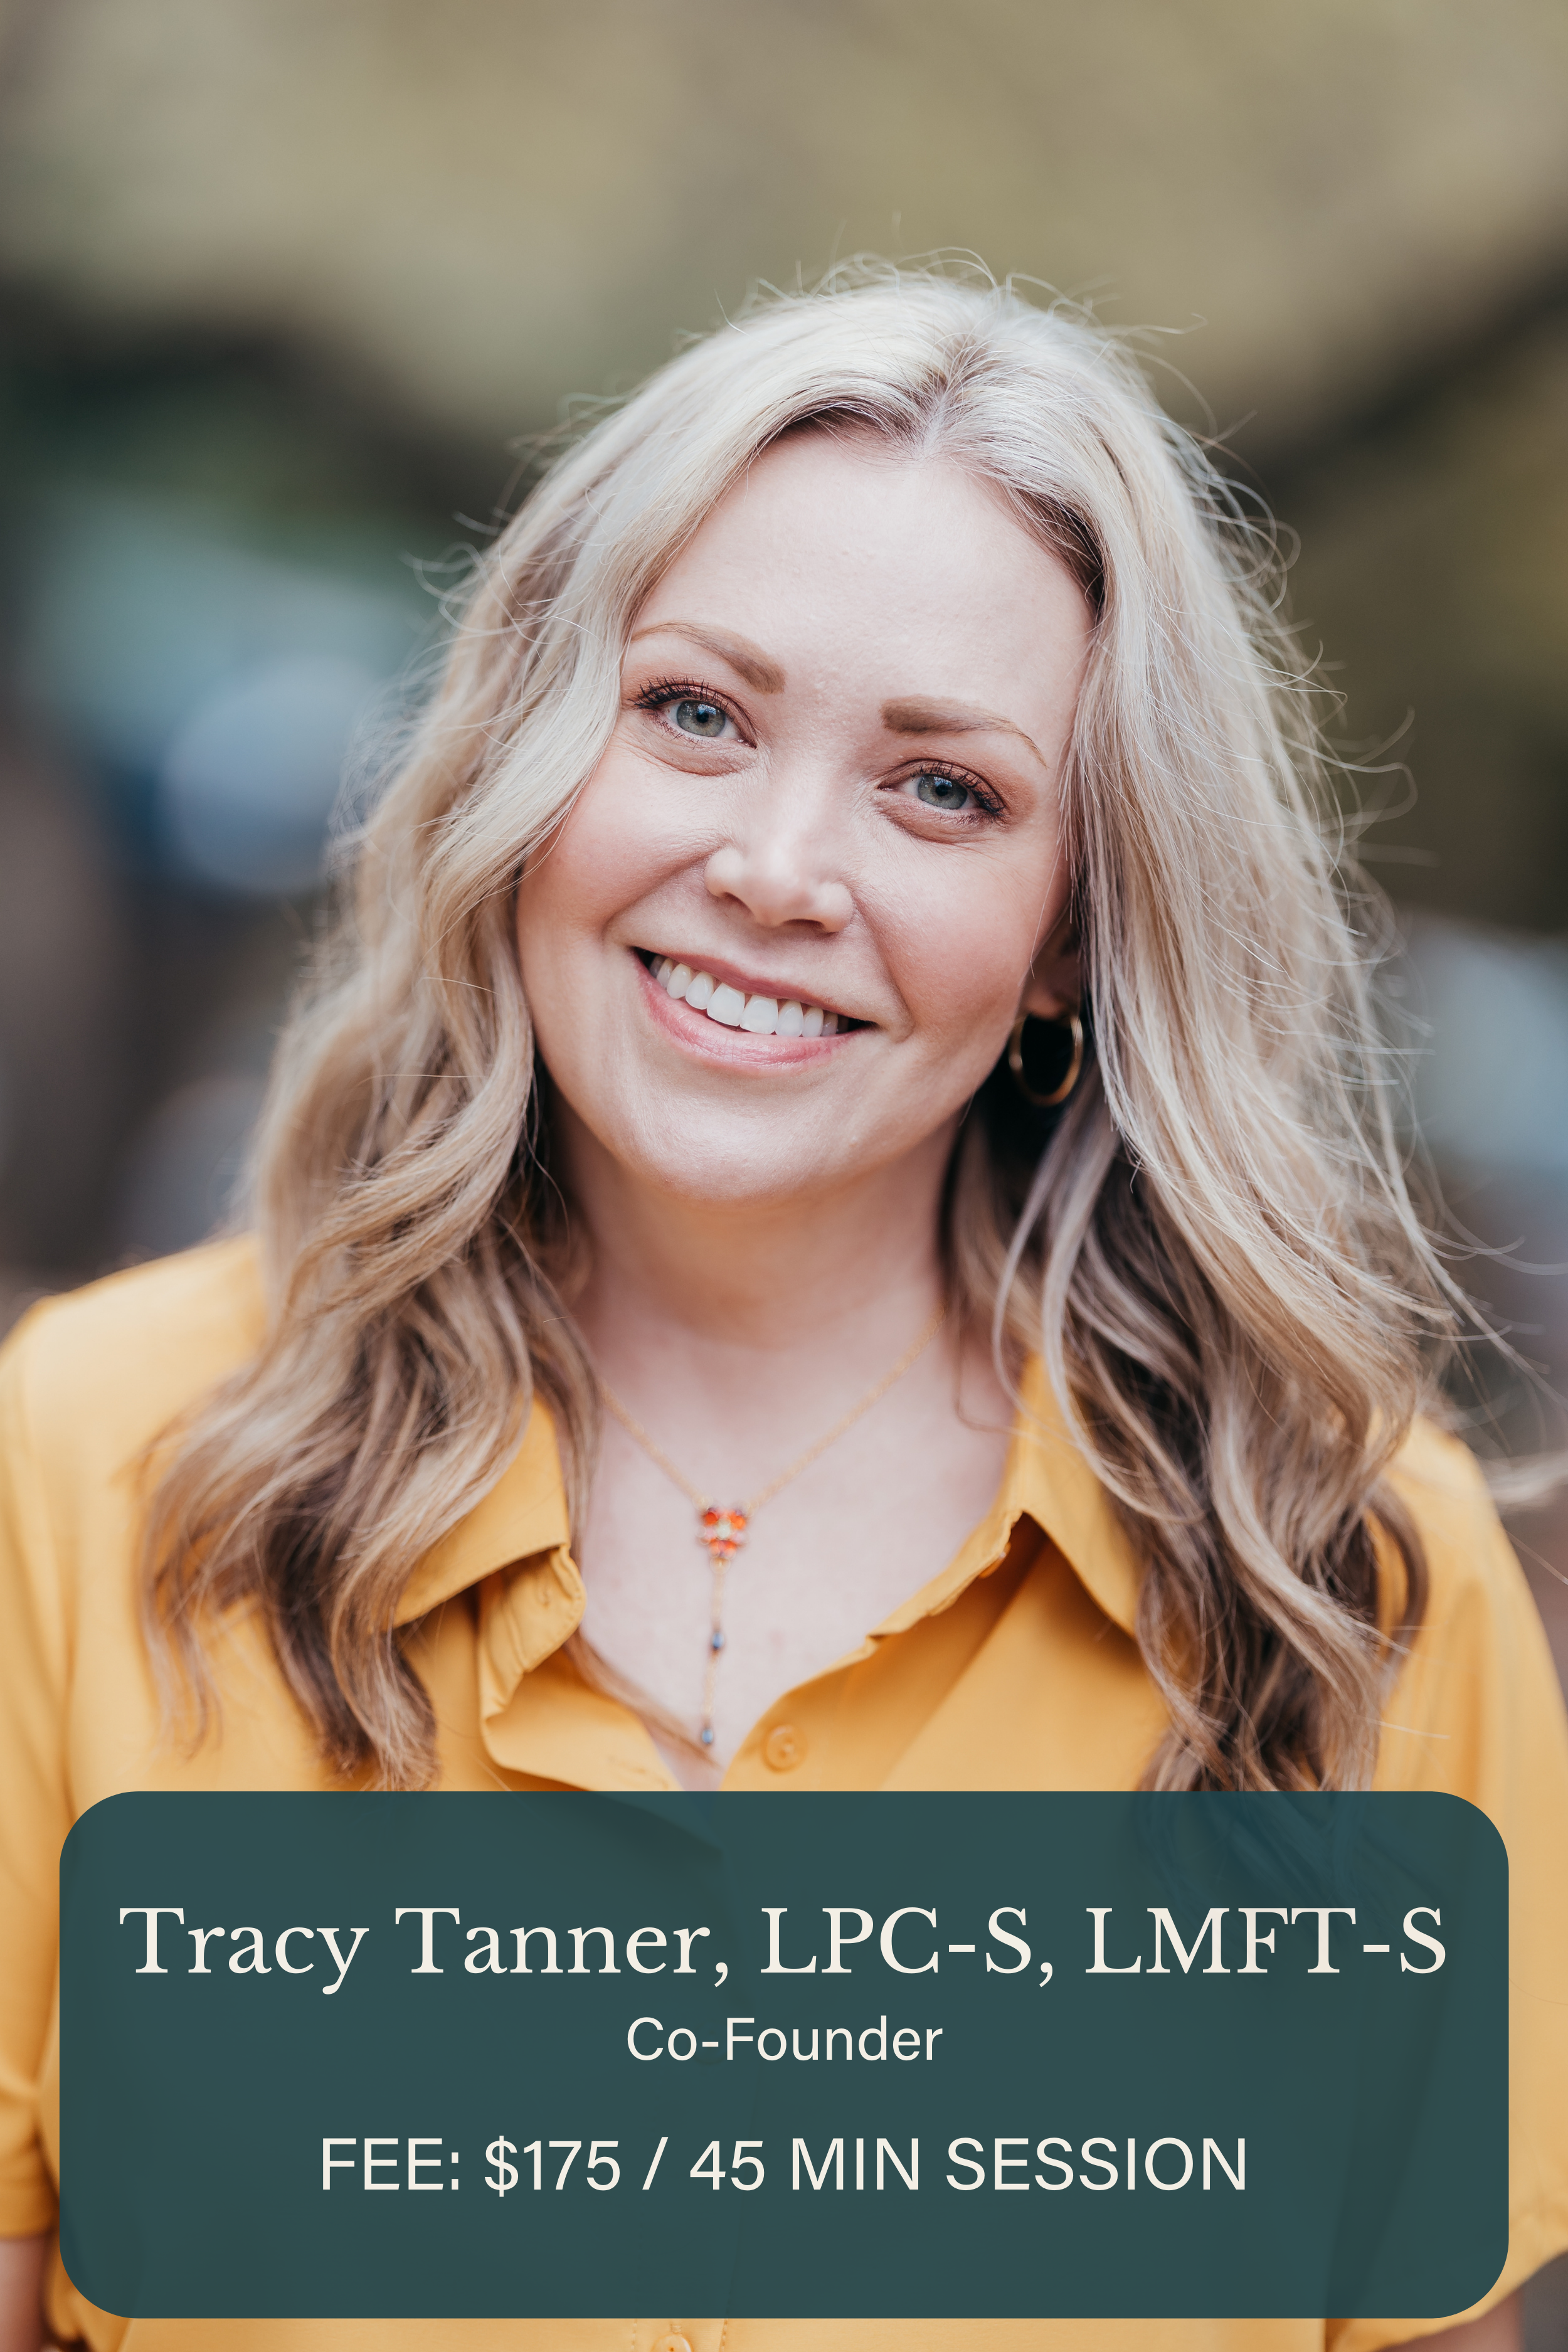 Tracy Tanner, LPC-S, LMFT-S